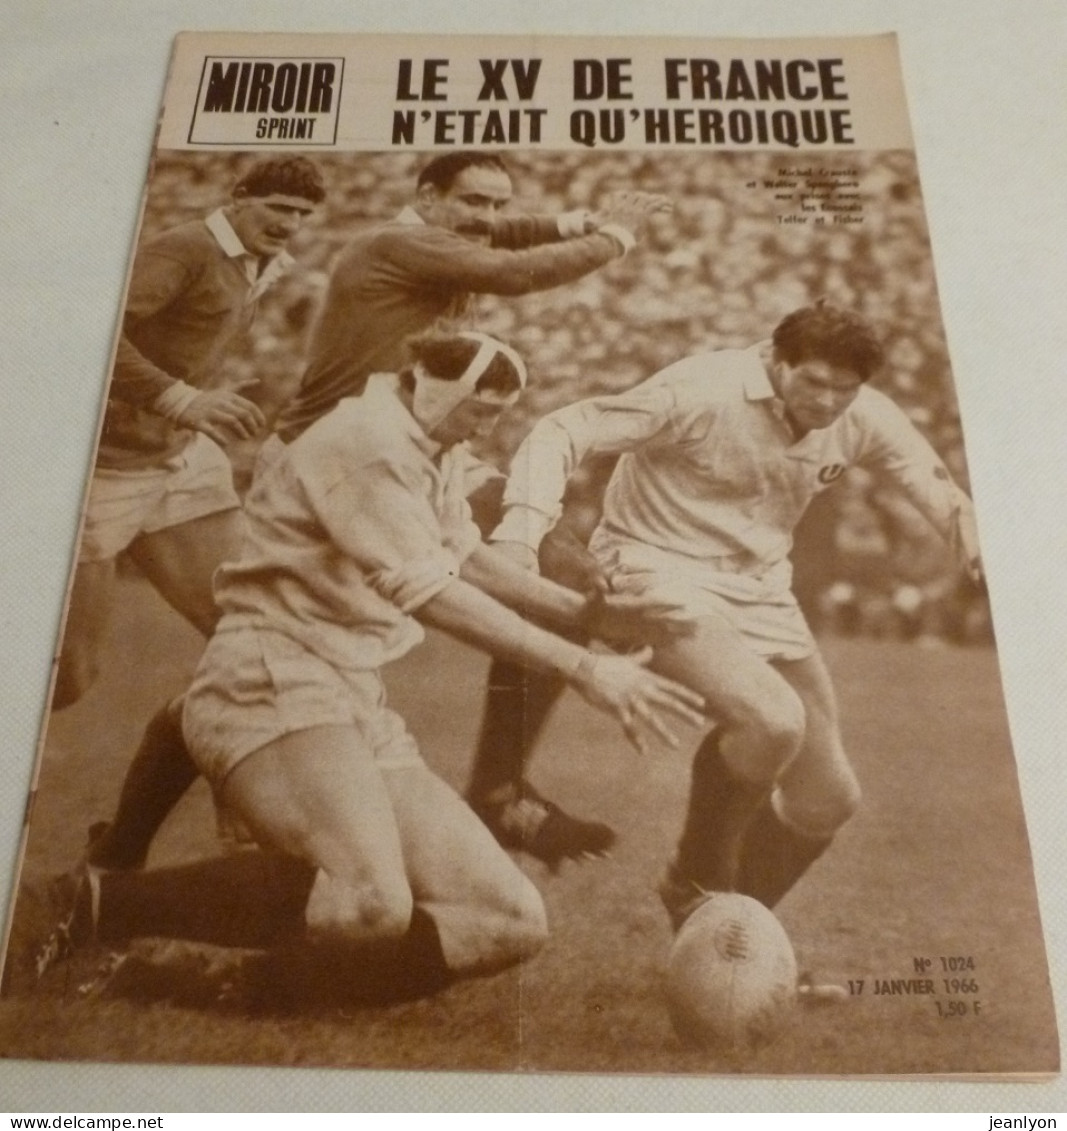 MIROIR SPRINT / Magazine Sport - RUGBY / XV France Vs Ecosse - FOOTBALL / Coupe : Mutzig Et Niort - N° 1024 Janvier 1966 - Deportes